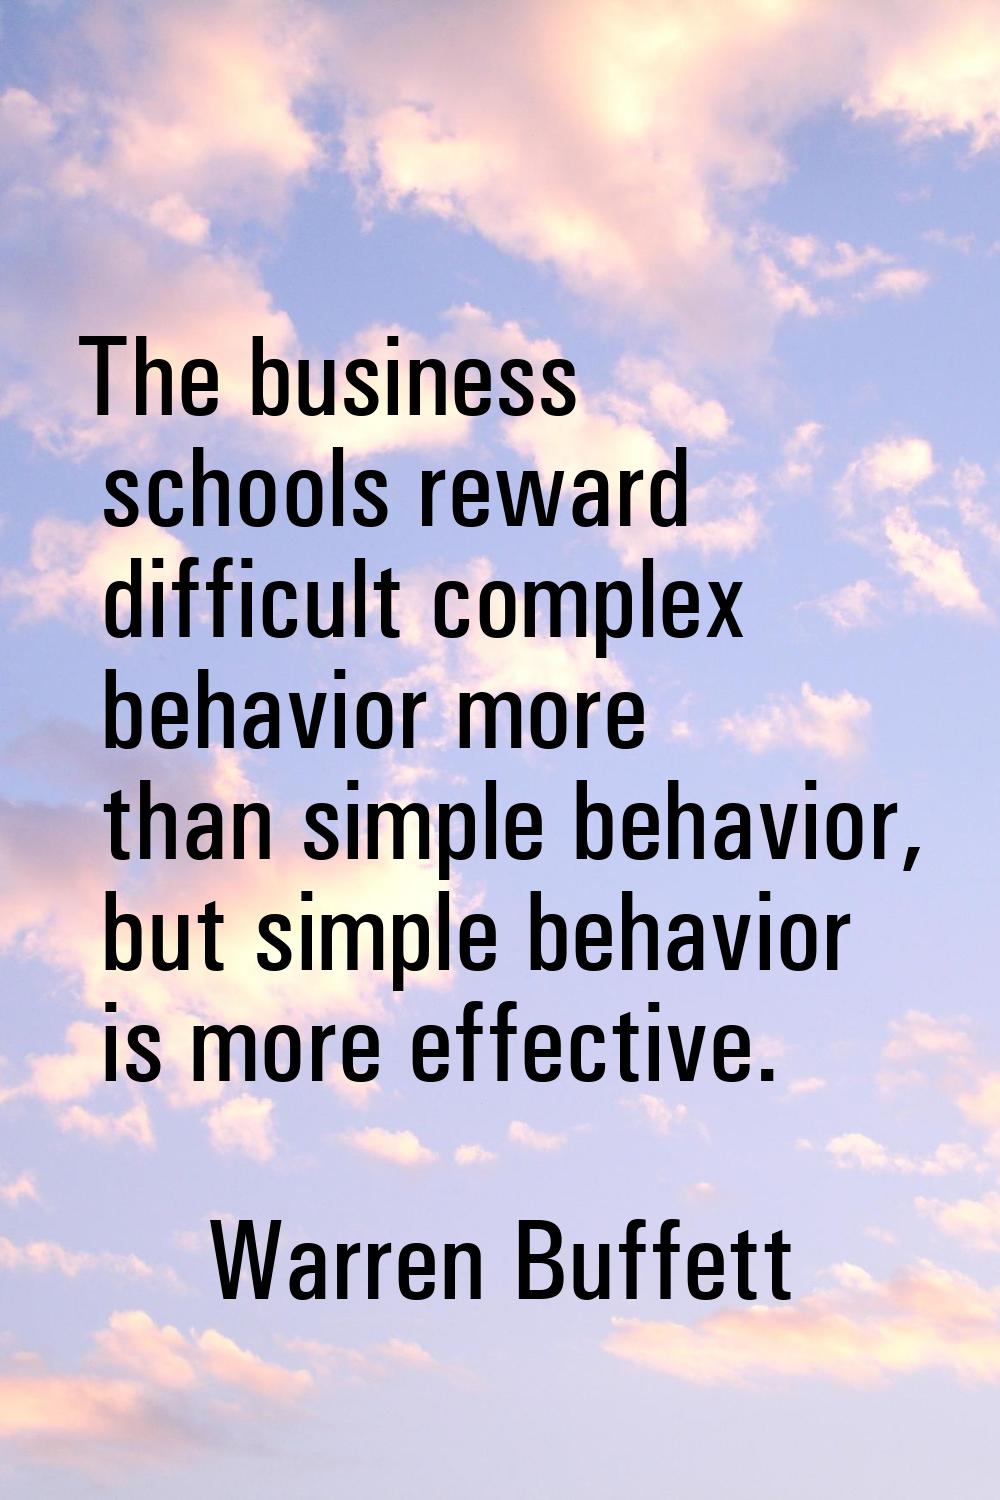 The business schools reward difficult complex behavior more than simple behavior, but simple behavi